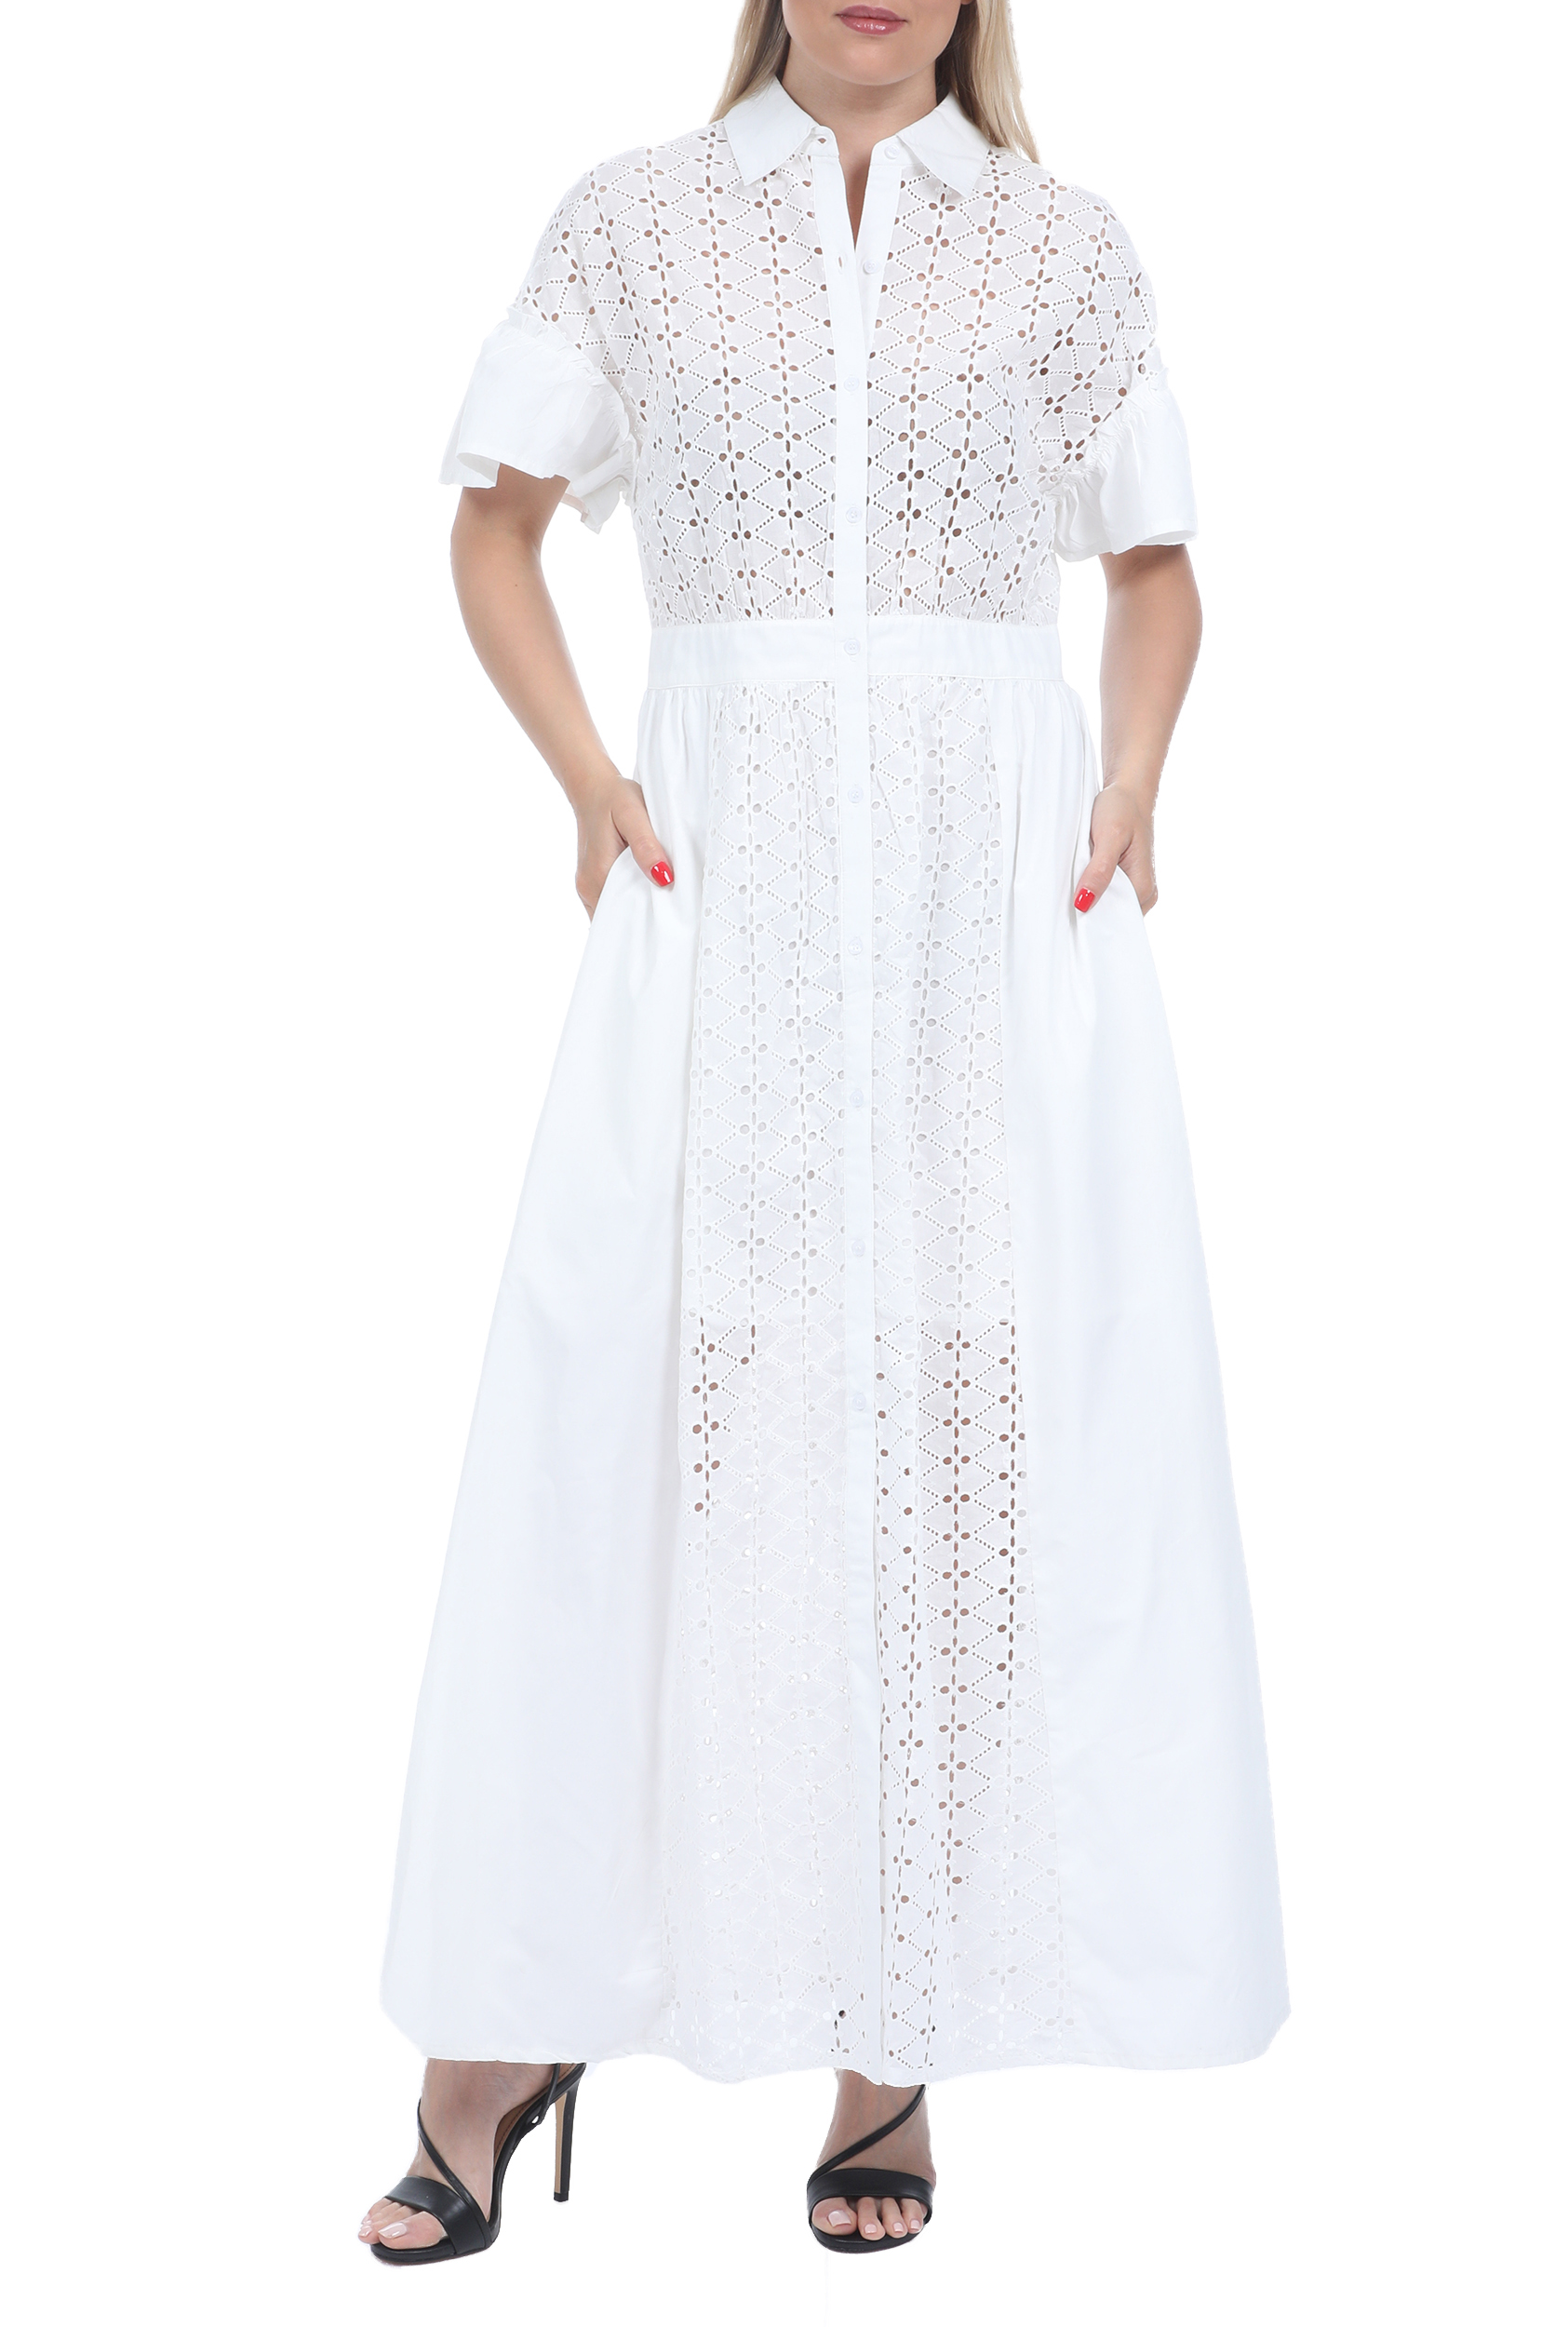 GAUDI – Γυναικειο maxi φορεμα GAUDI λευκο